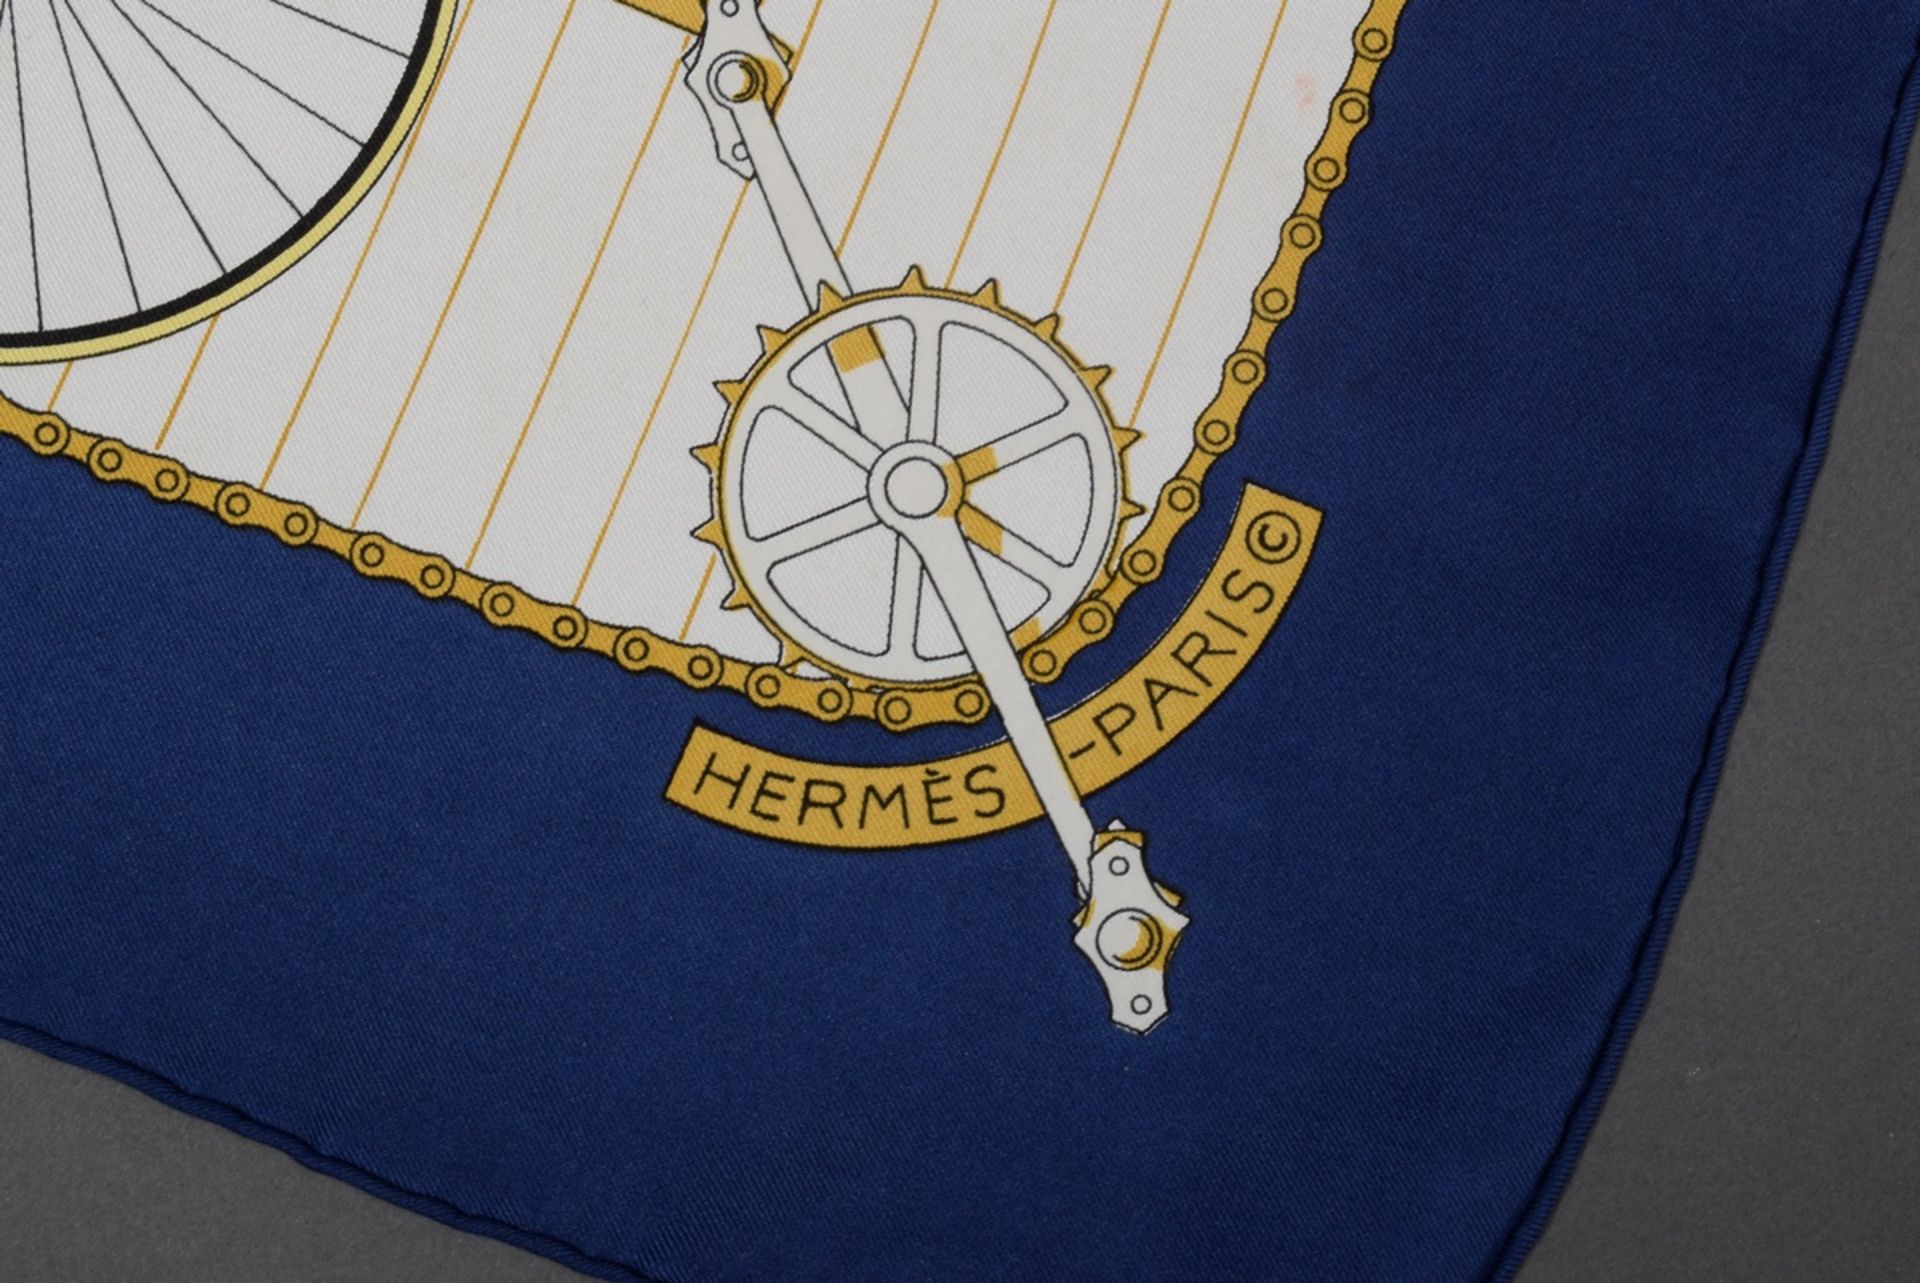 Hermès silk carré "Les Becanes", design: Hugo Grykar 1957/73, 90x90cm, slightly stained - Image 3 of 4